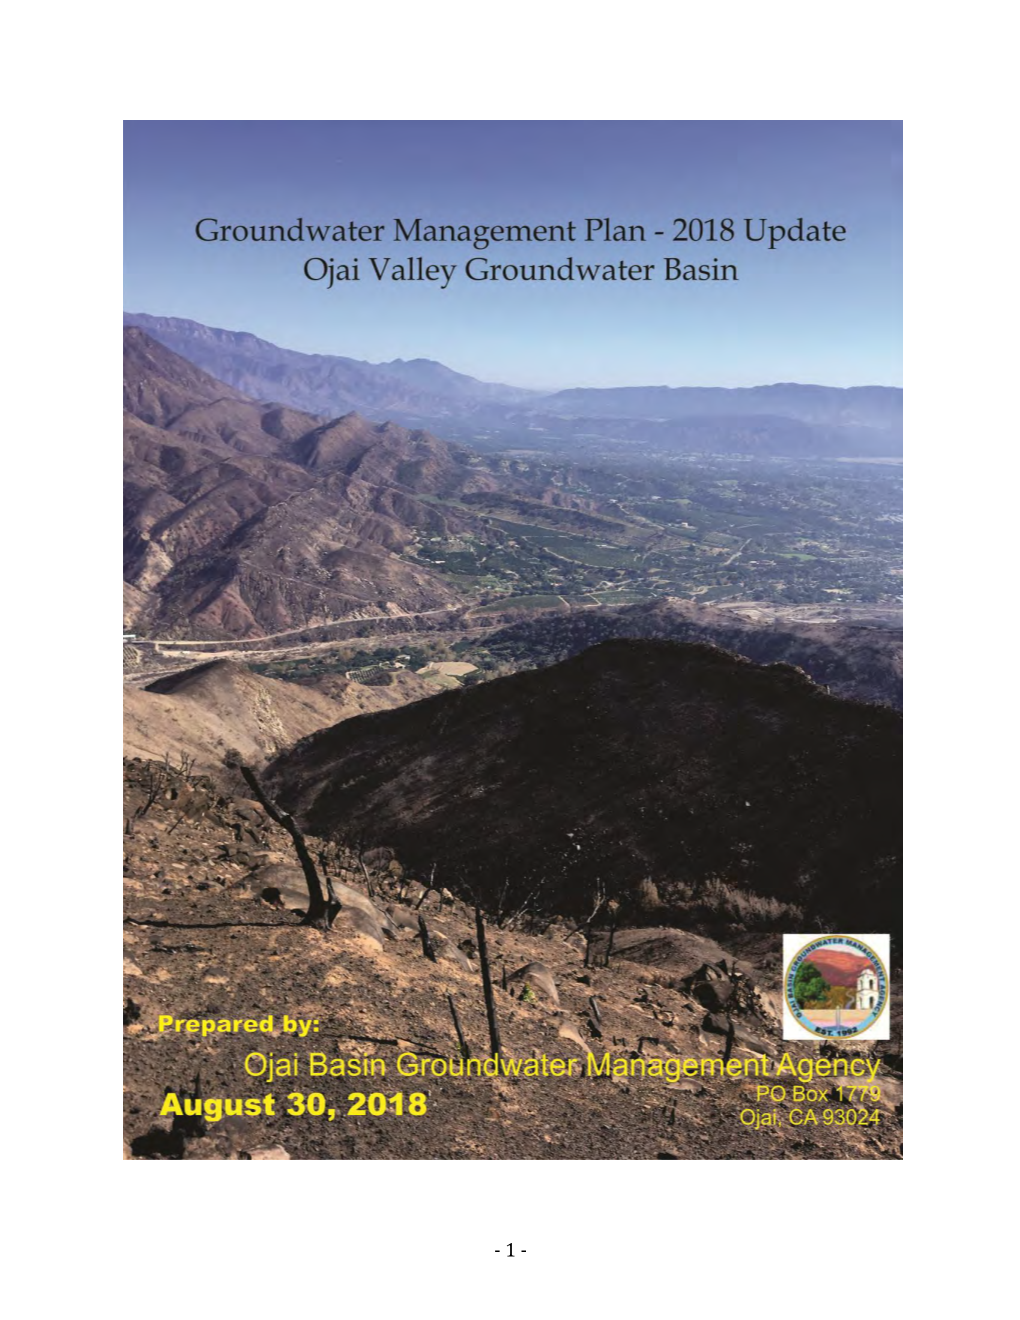 Ojai Basin Groundwater Management Plan Update, 2018